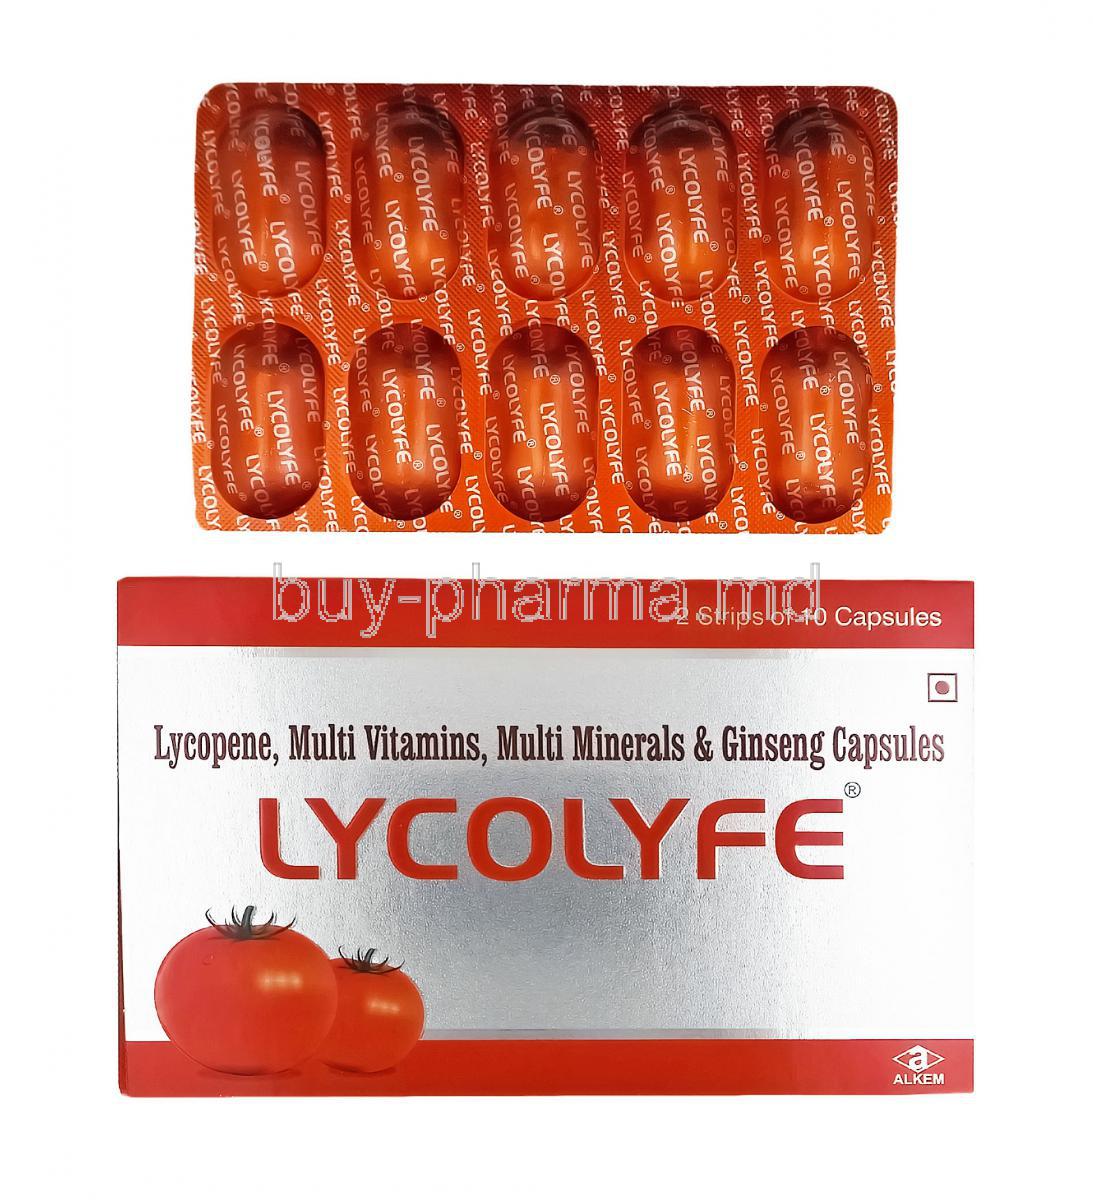 Lycolyfe